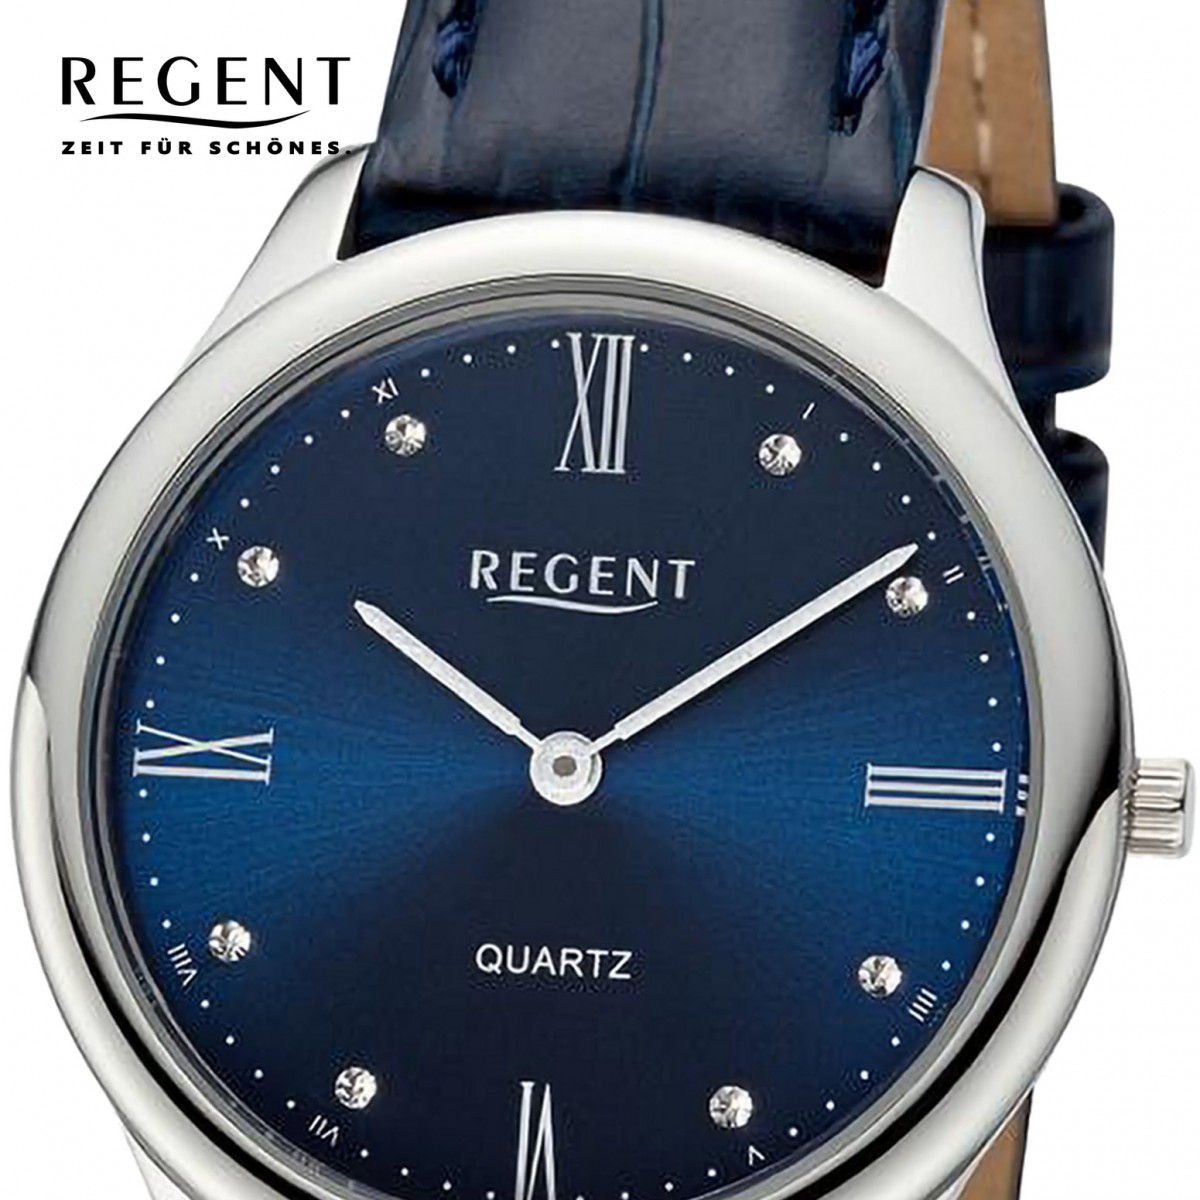 Regent Damen Armbanduhr Analog Lederarmband blau UR2114082